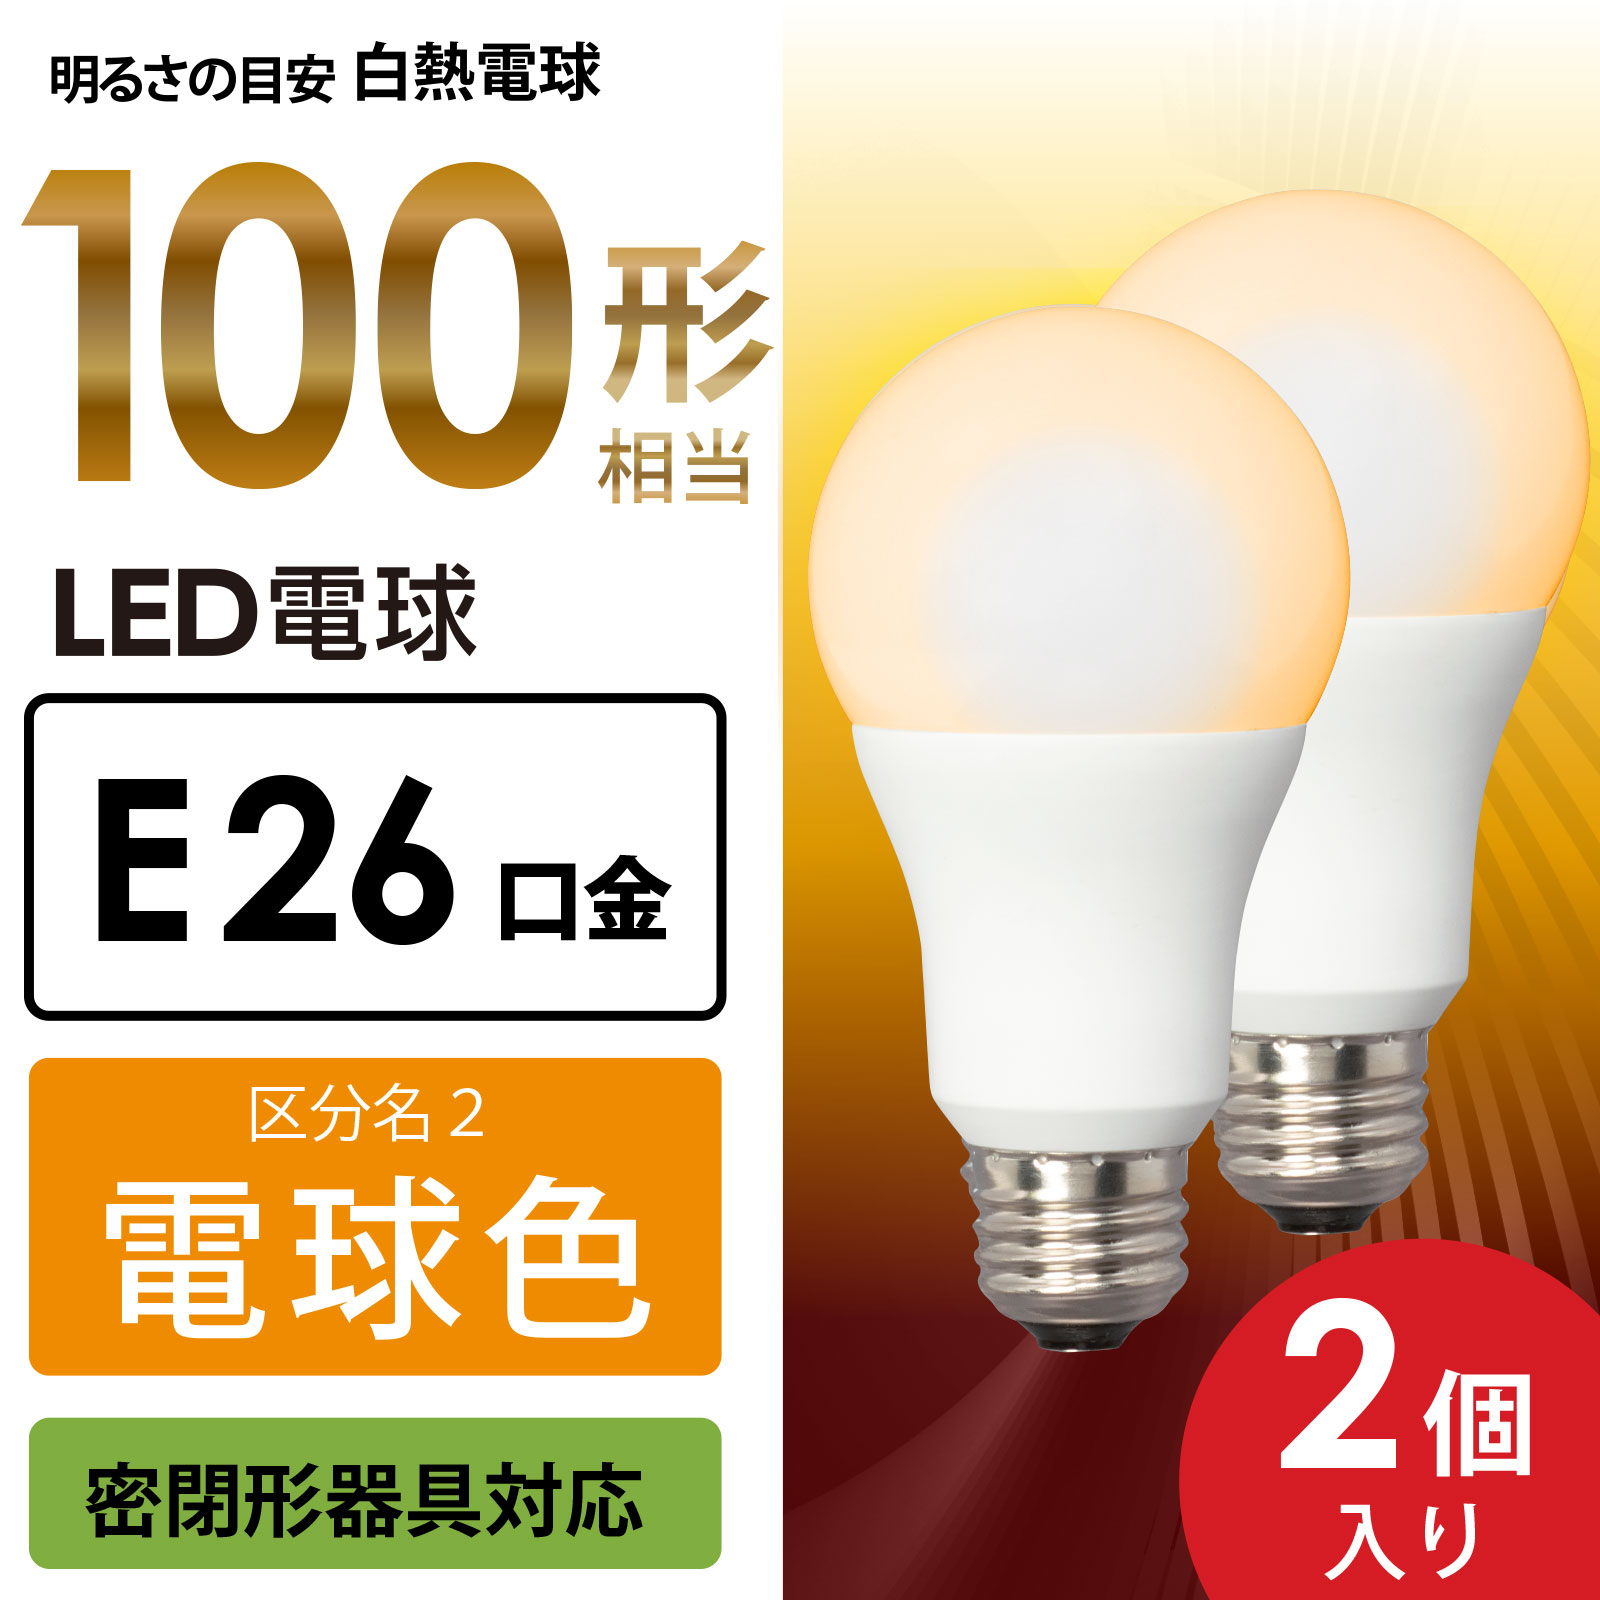 LED電球 E26 100形相当 電球色 広配光 2個入｜LDA13L-G AG52 2P 06-4710 オーム電機 2